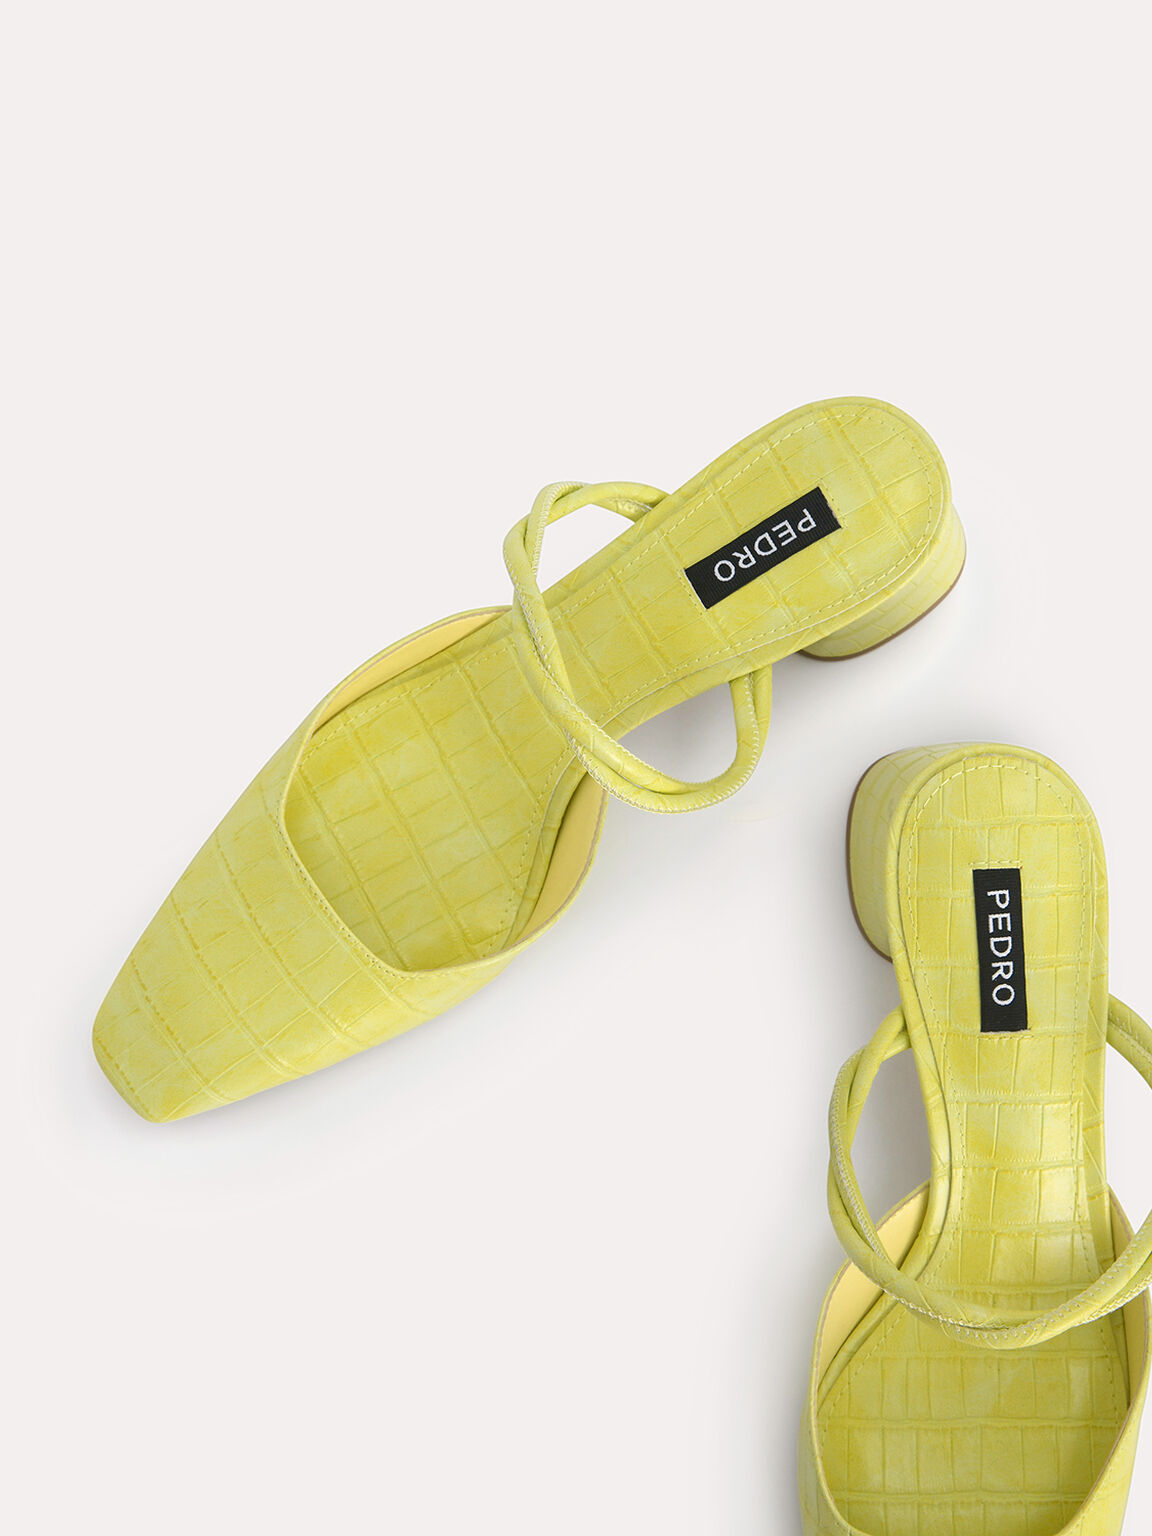 鱷魚紋高跟穆勒鞋, 黄色